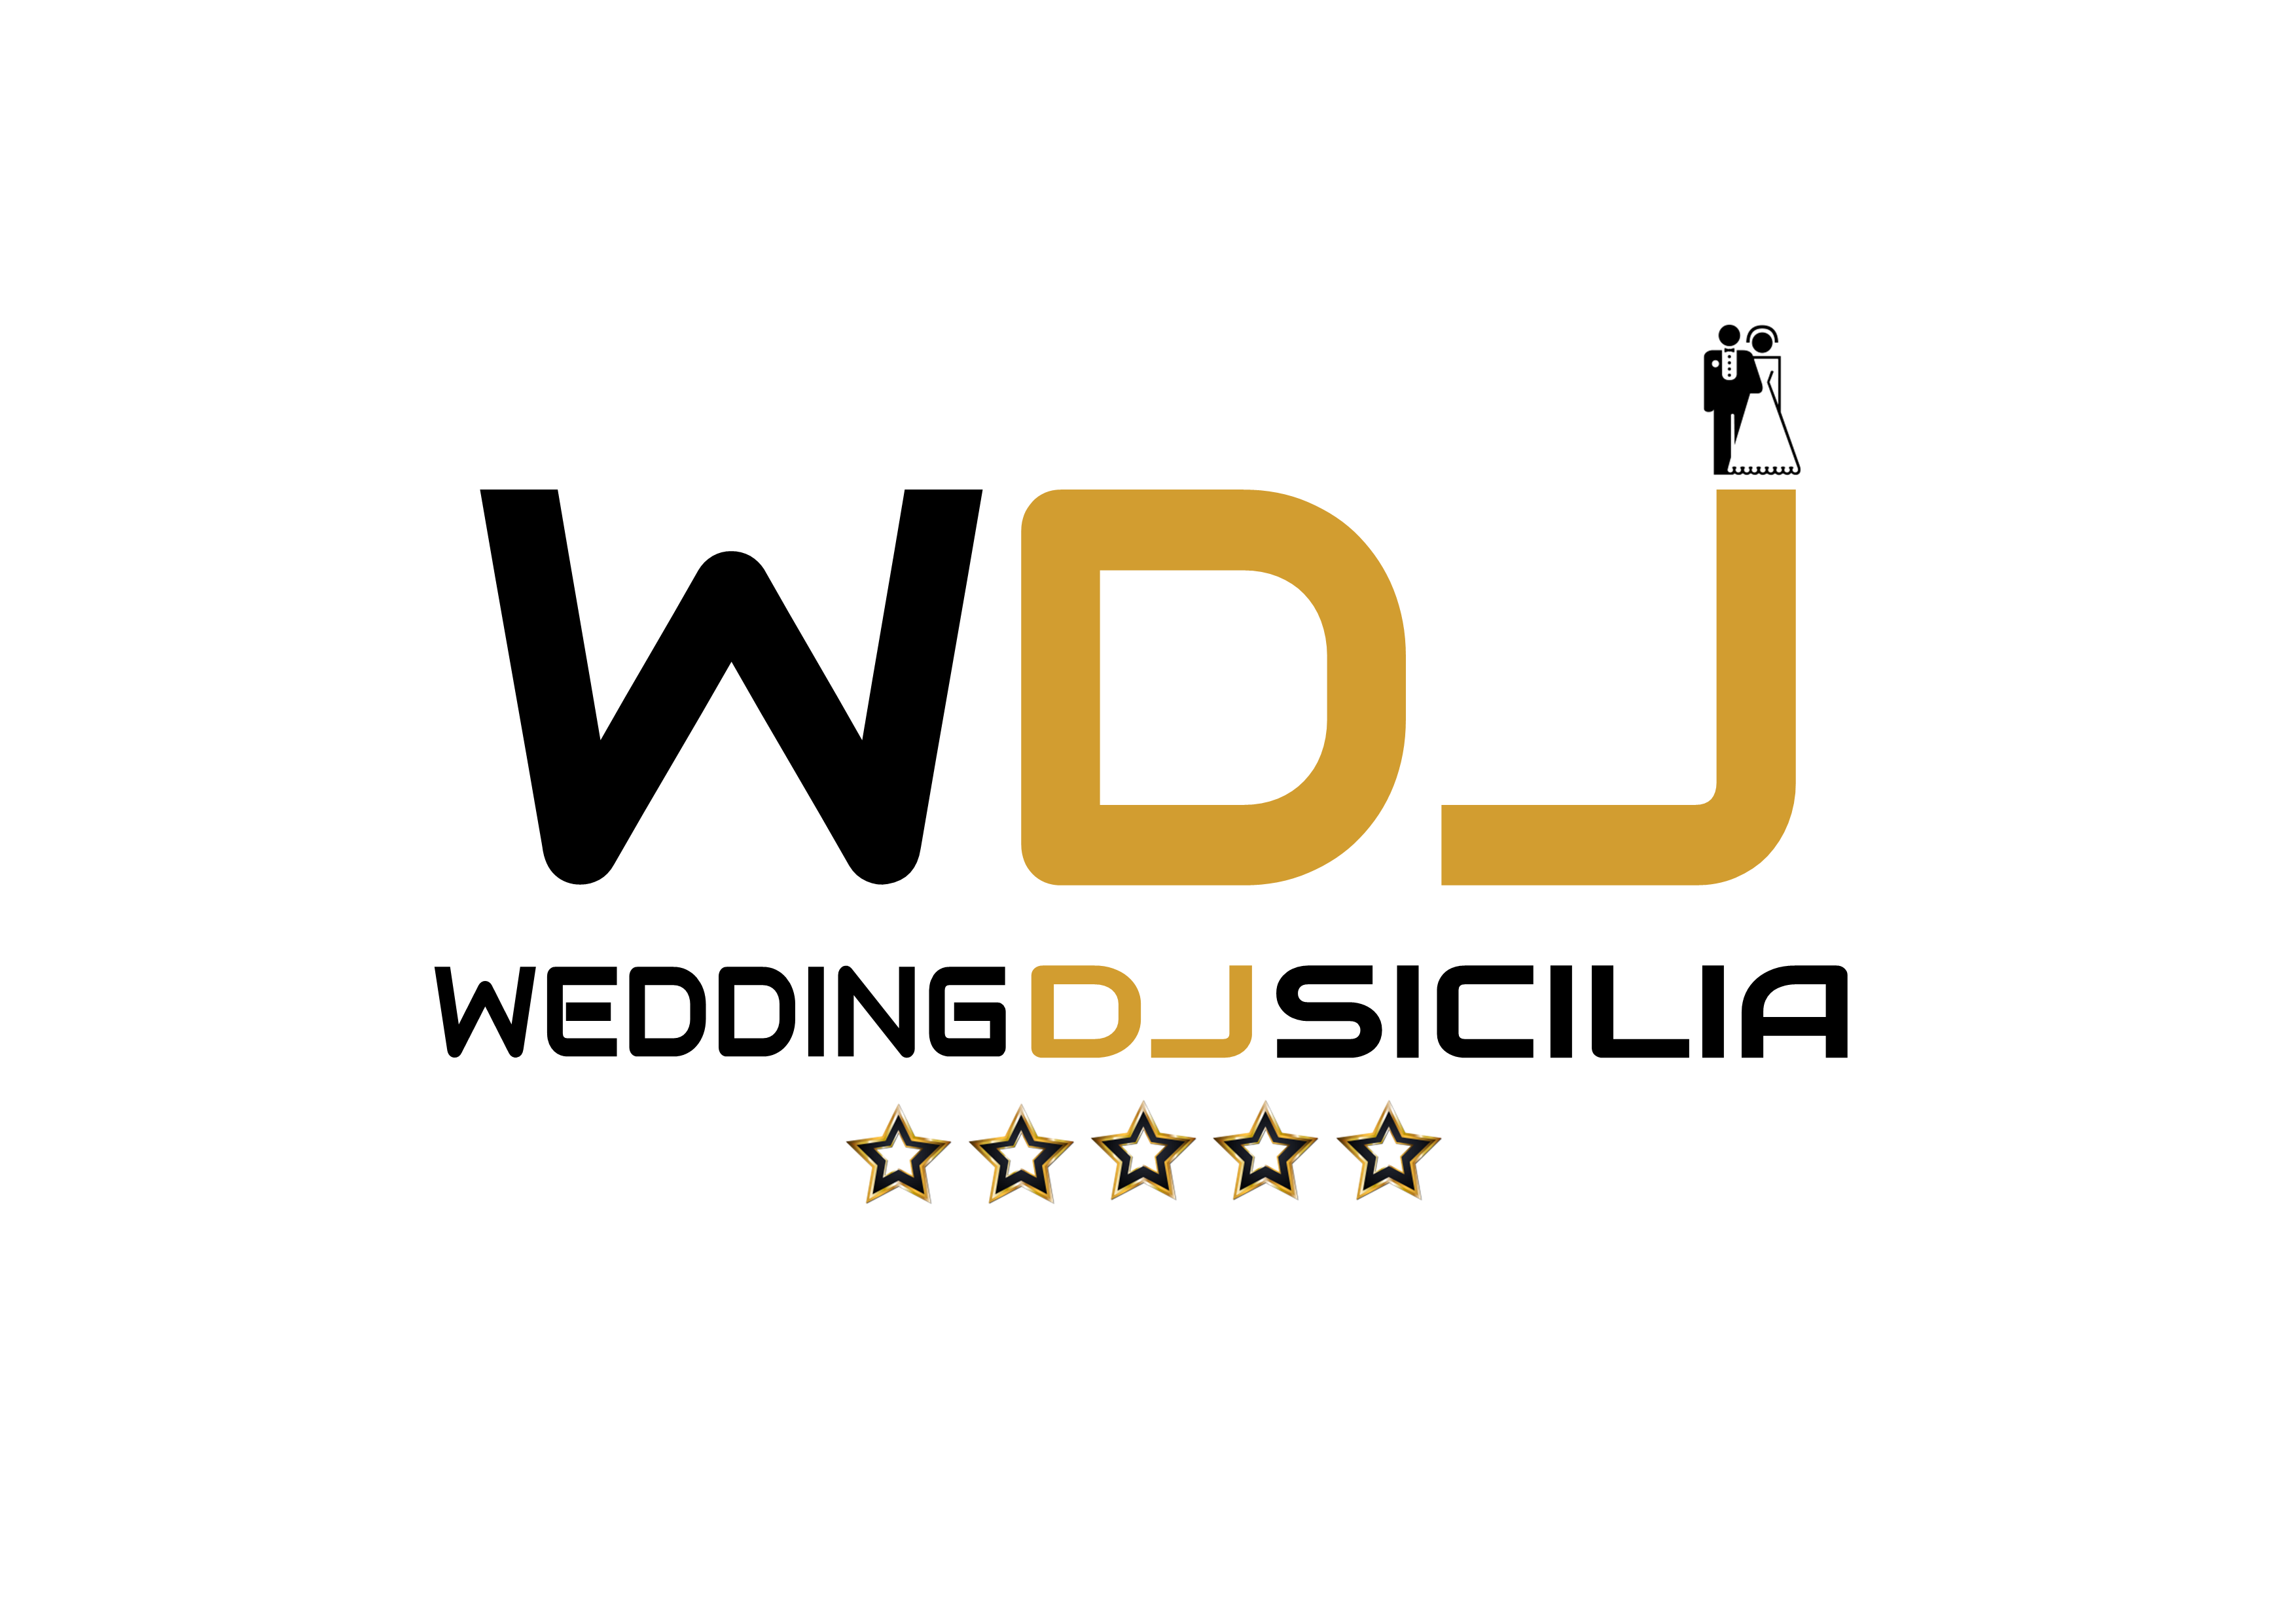 WEDDING DJ SICILIA